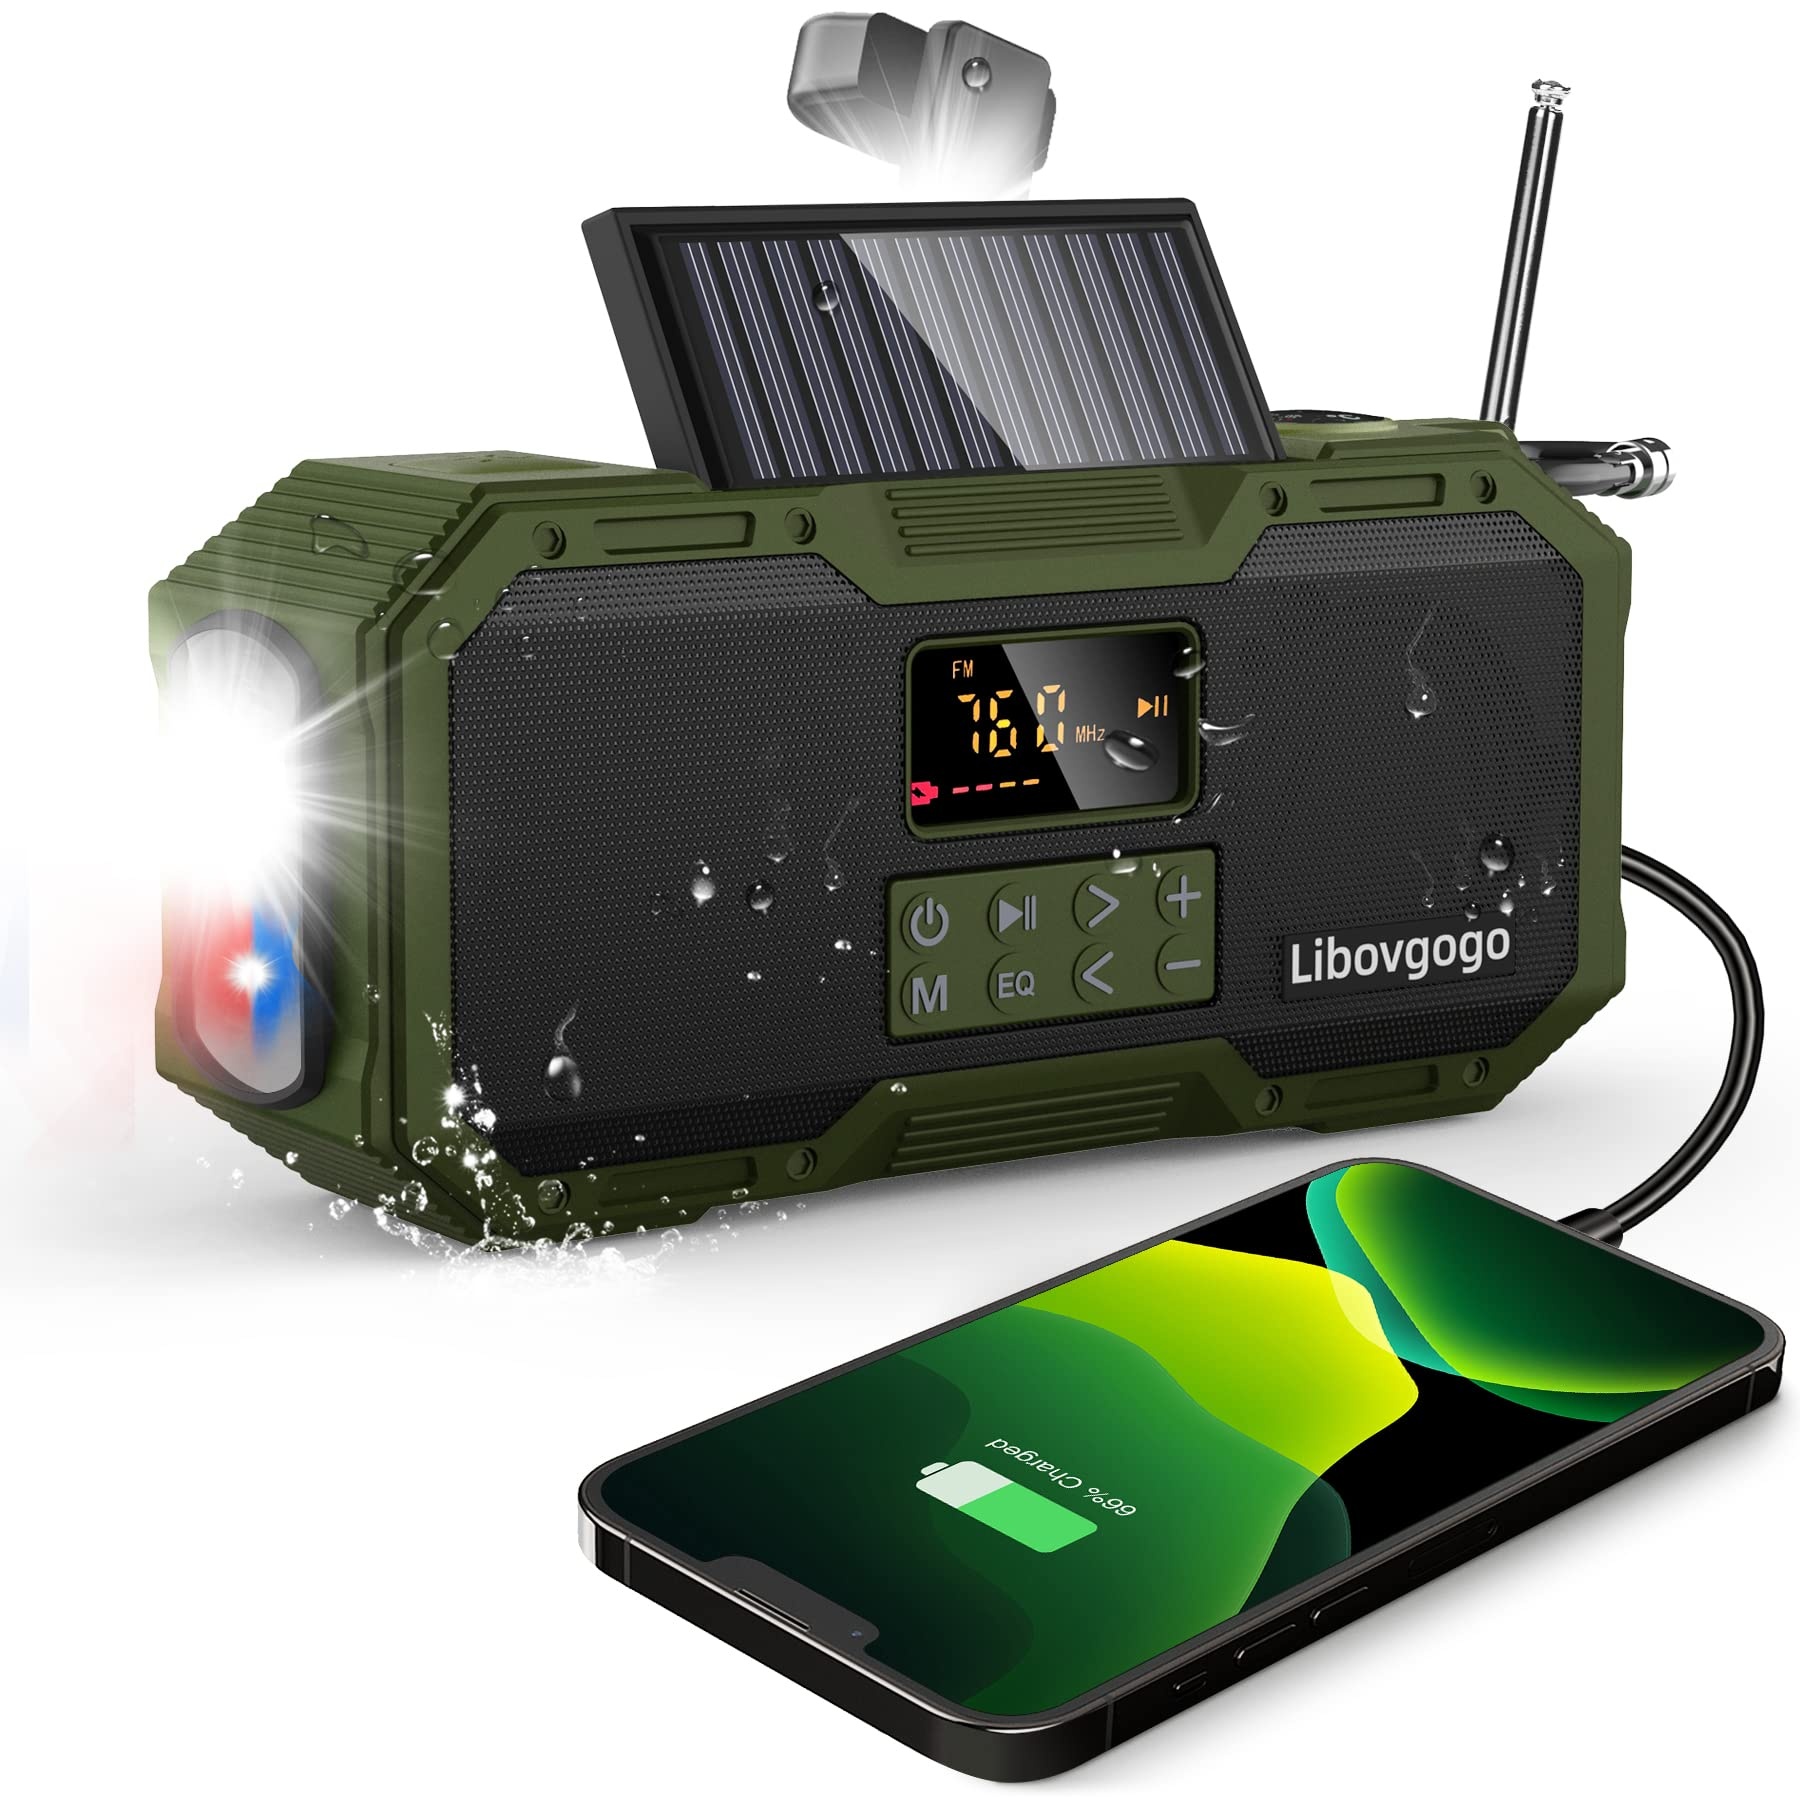 Libovgogo DF-588 Auto-Scan FM/AM Kurbelradio mit Handyladefuntion Solarladegerät,10W IPX5 Spritzschutz Bluetooth-Lautsprecher,tragbares Notfallradio 4000mAh Powerbank,Taschenlampe,Leselampe